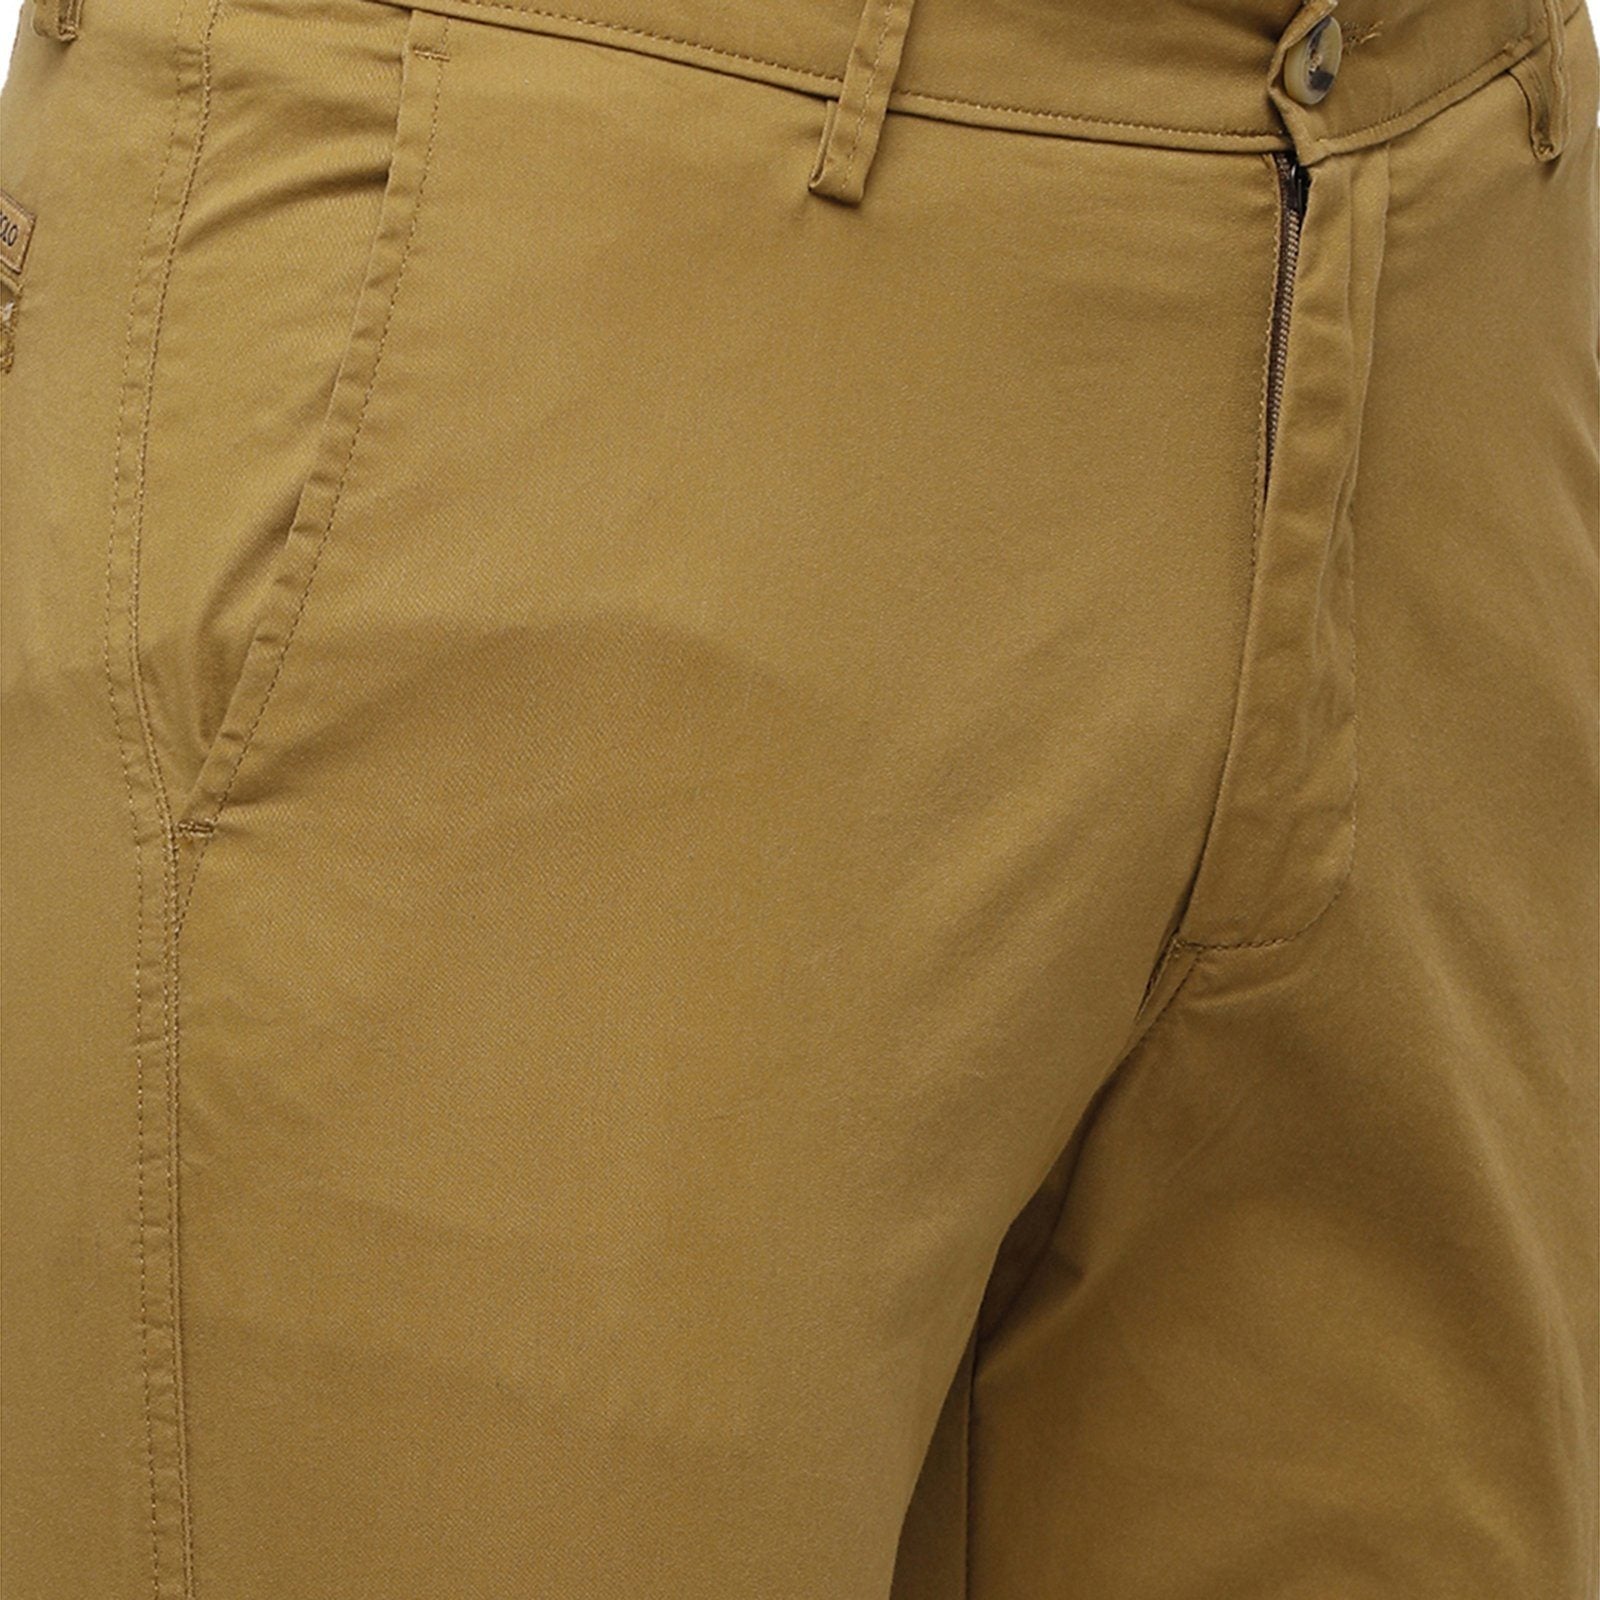 Classic Polo Mens Slim Fit Bottom Bottom Solid Cotton Blend Khaki Trousers  TM128 AKHASLLY  Classic Polo